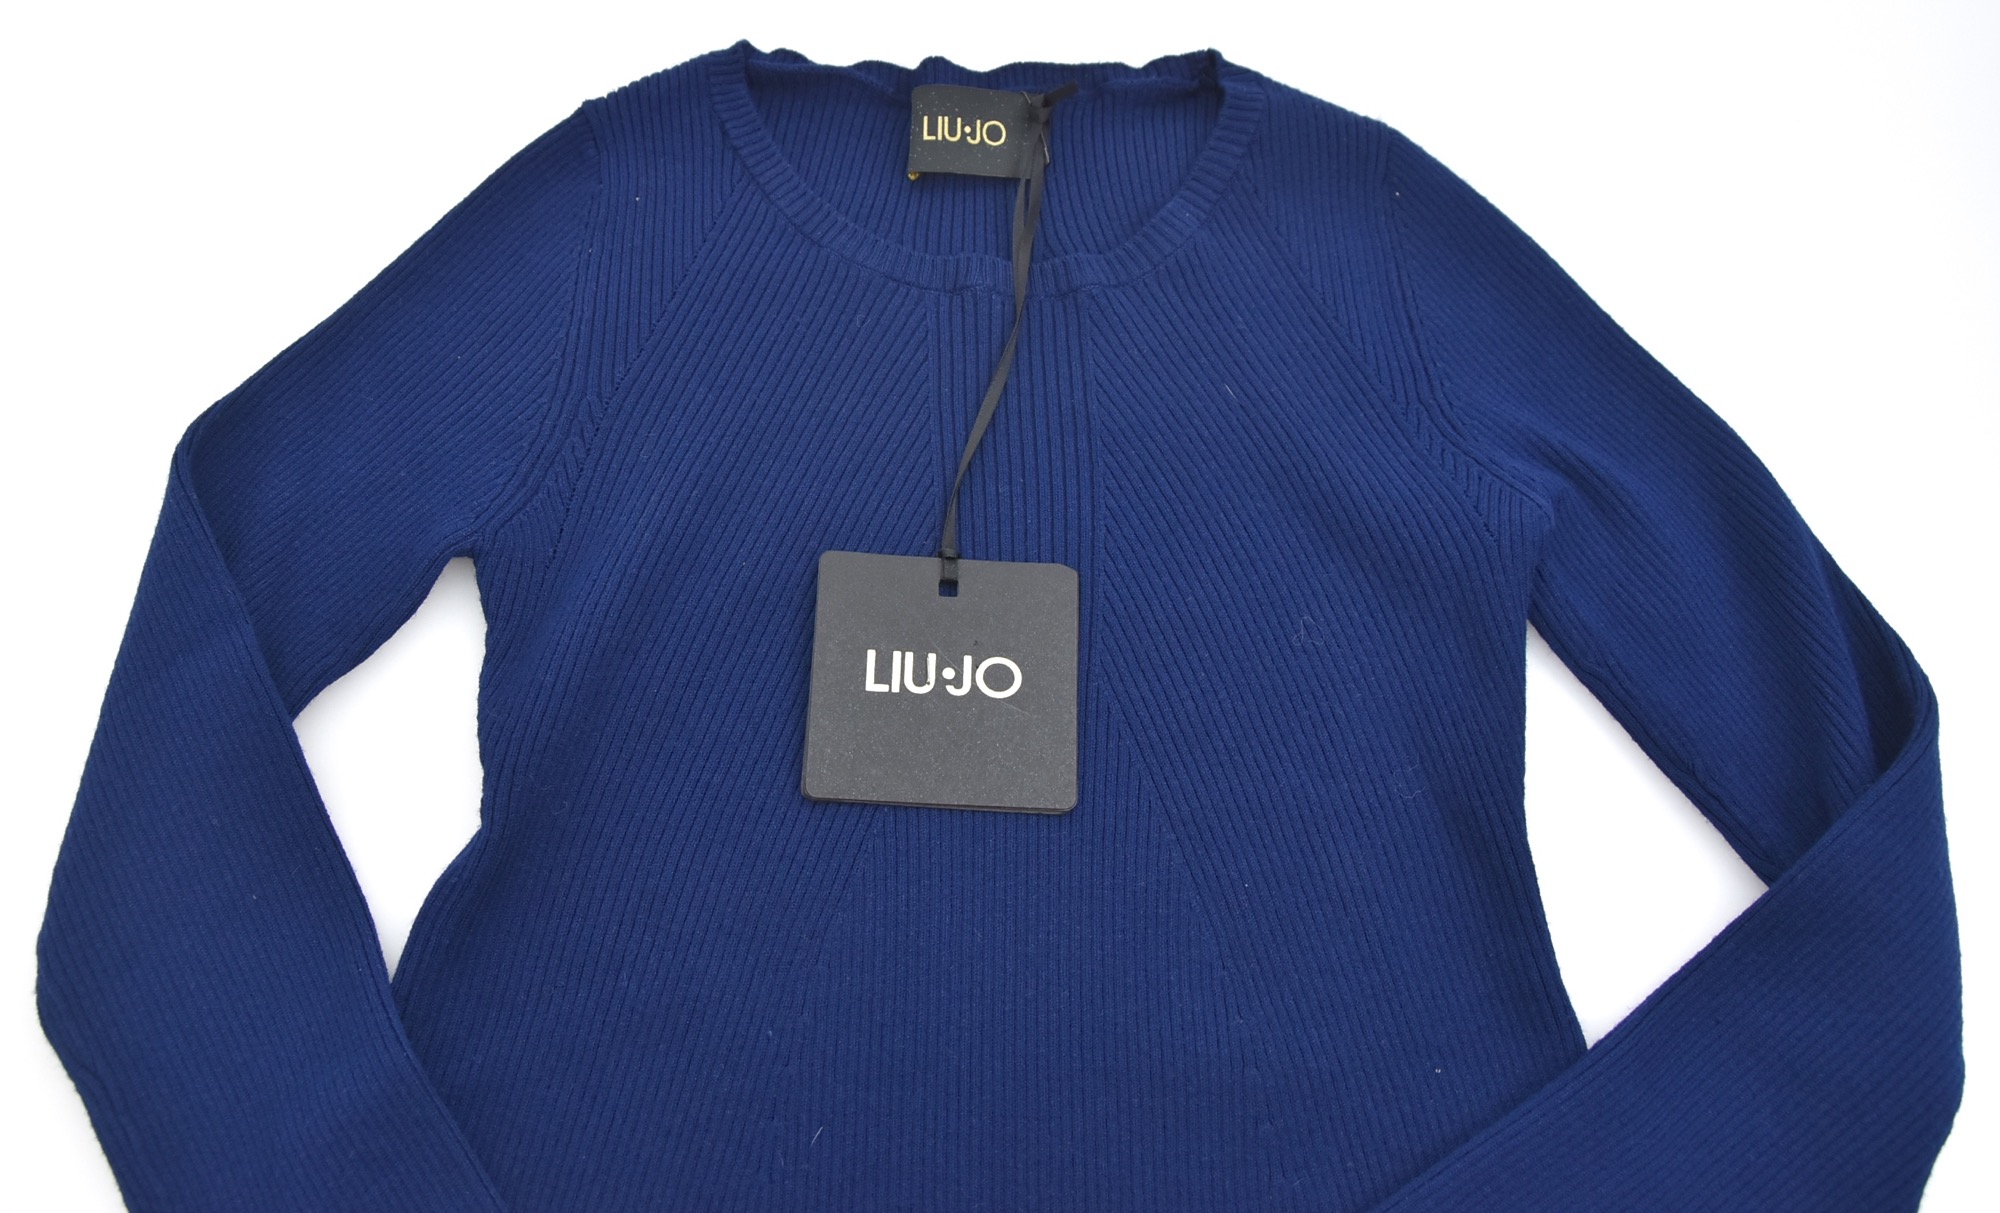 193 L Ex Hobbs Dragonfly Cotton T-Shirt Fine Knit Jumper in Blue Navy Size XS